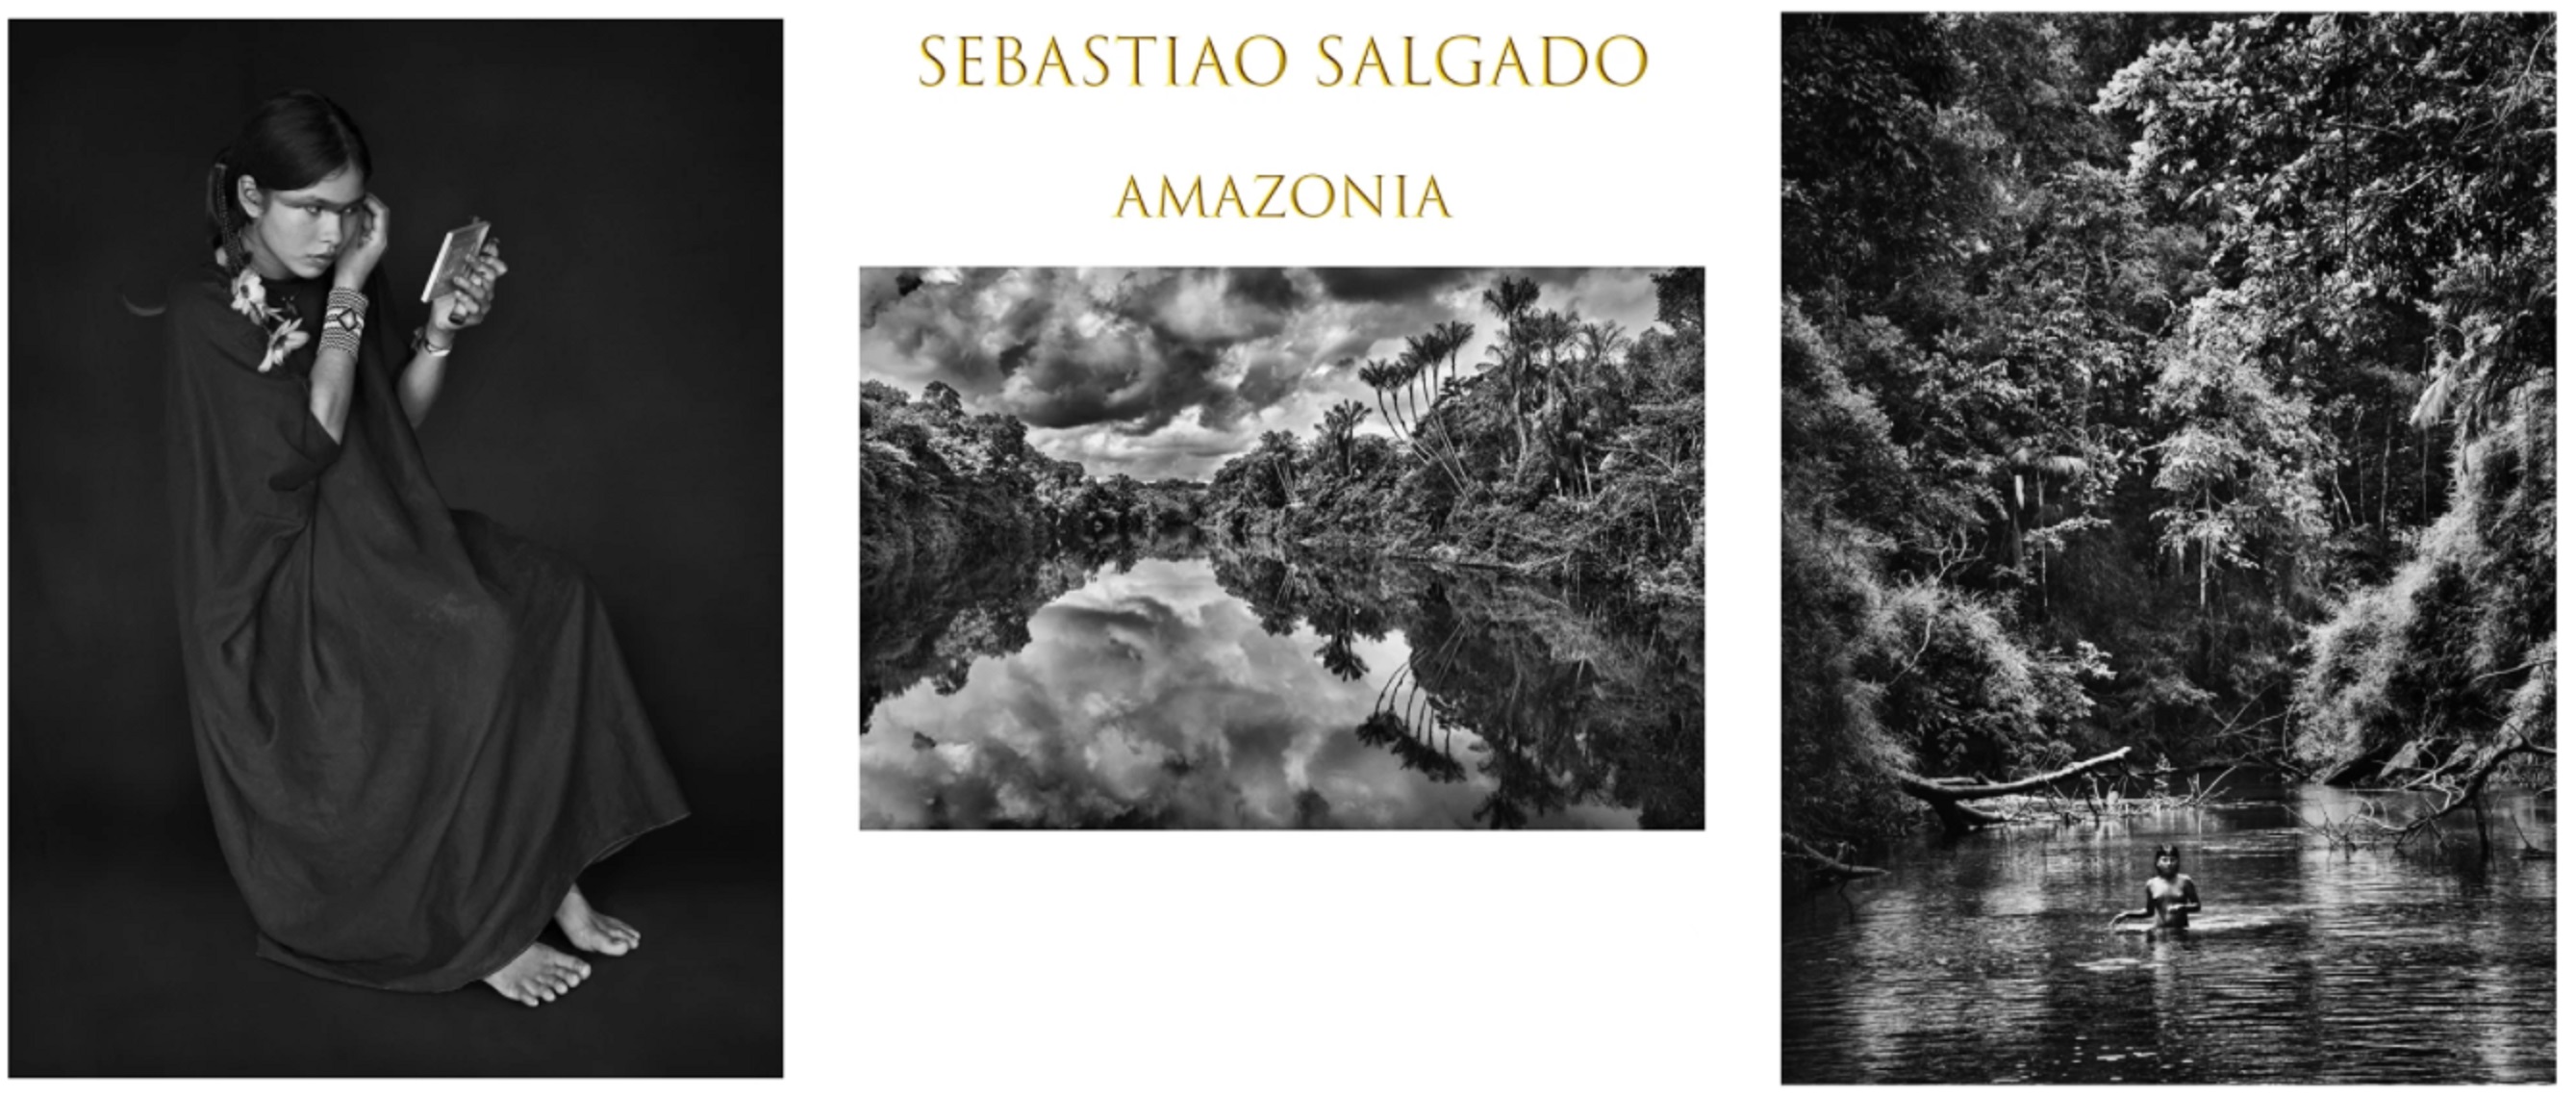 Jean-Michel Jarre ‘AMAZÔNIA,’ a Soundtrack for the Exhibition by Sebastião Salgado